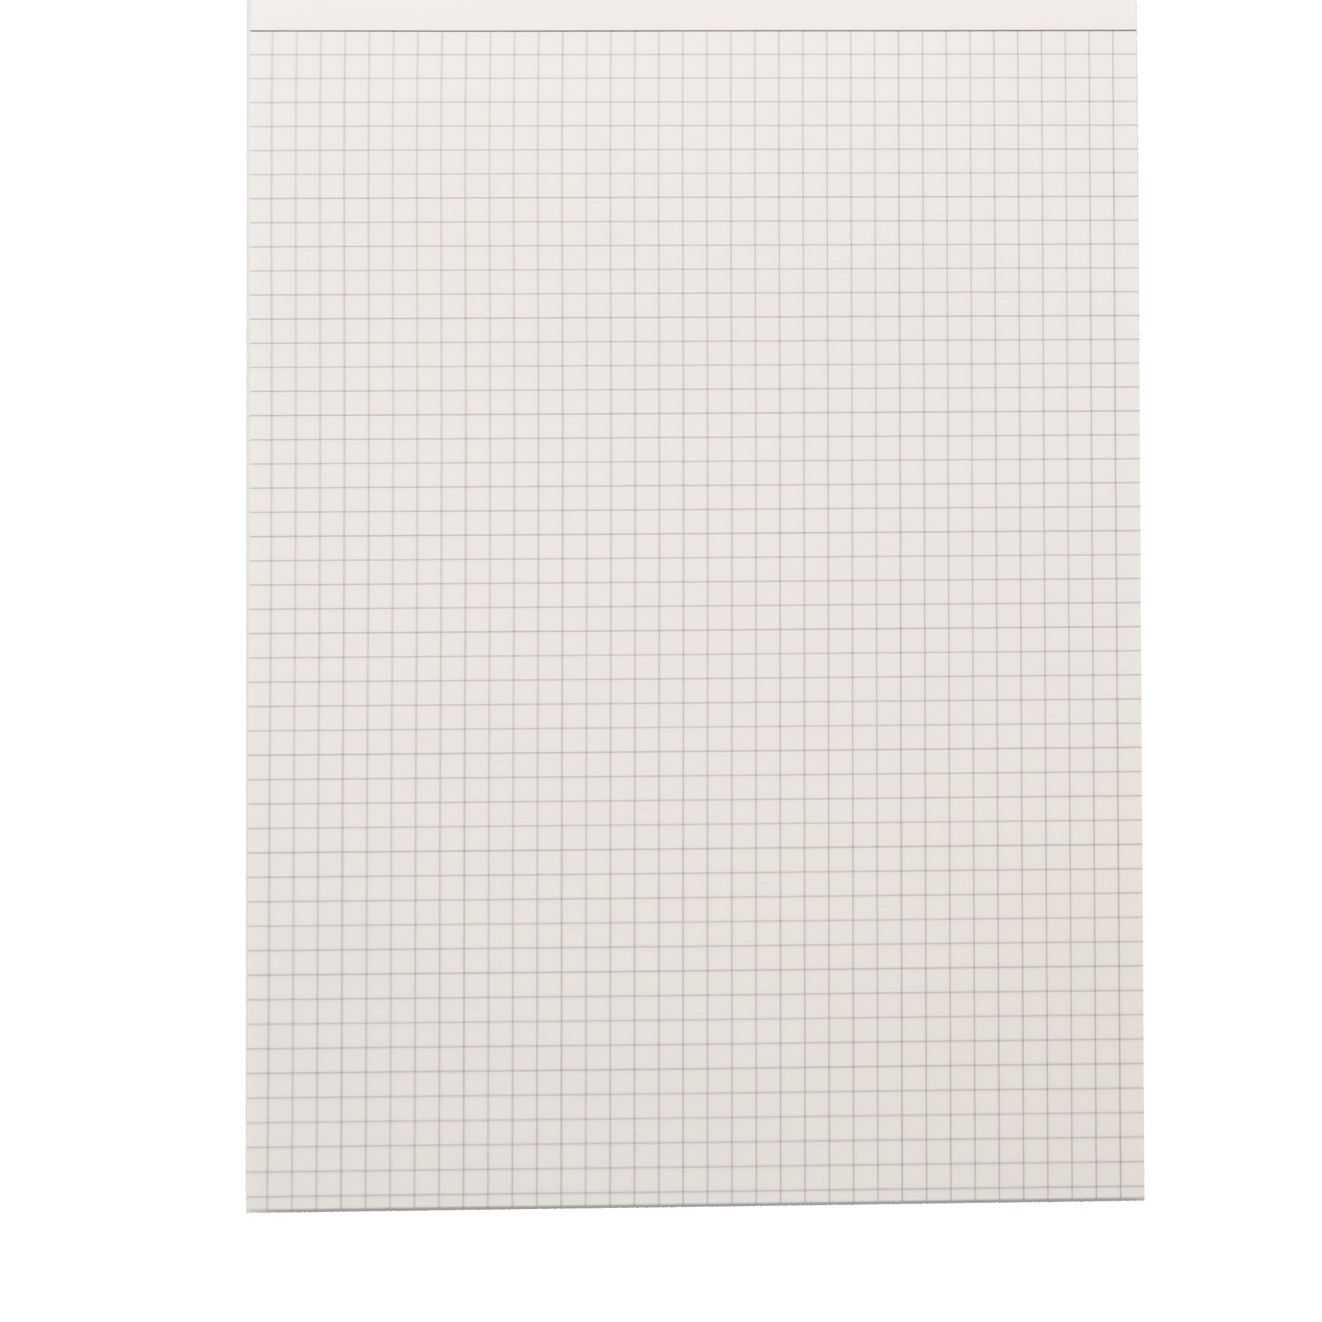 Wearingeul Nobile No.1 Paper Pad A5 Grid